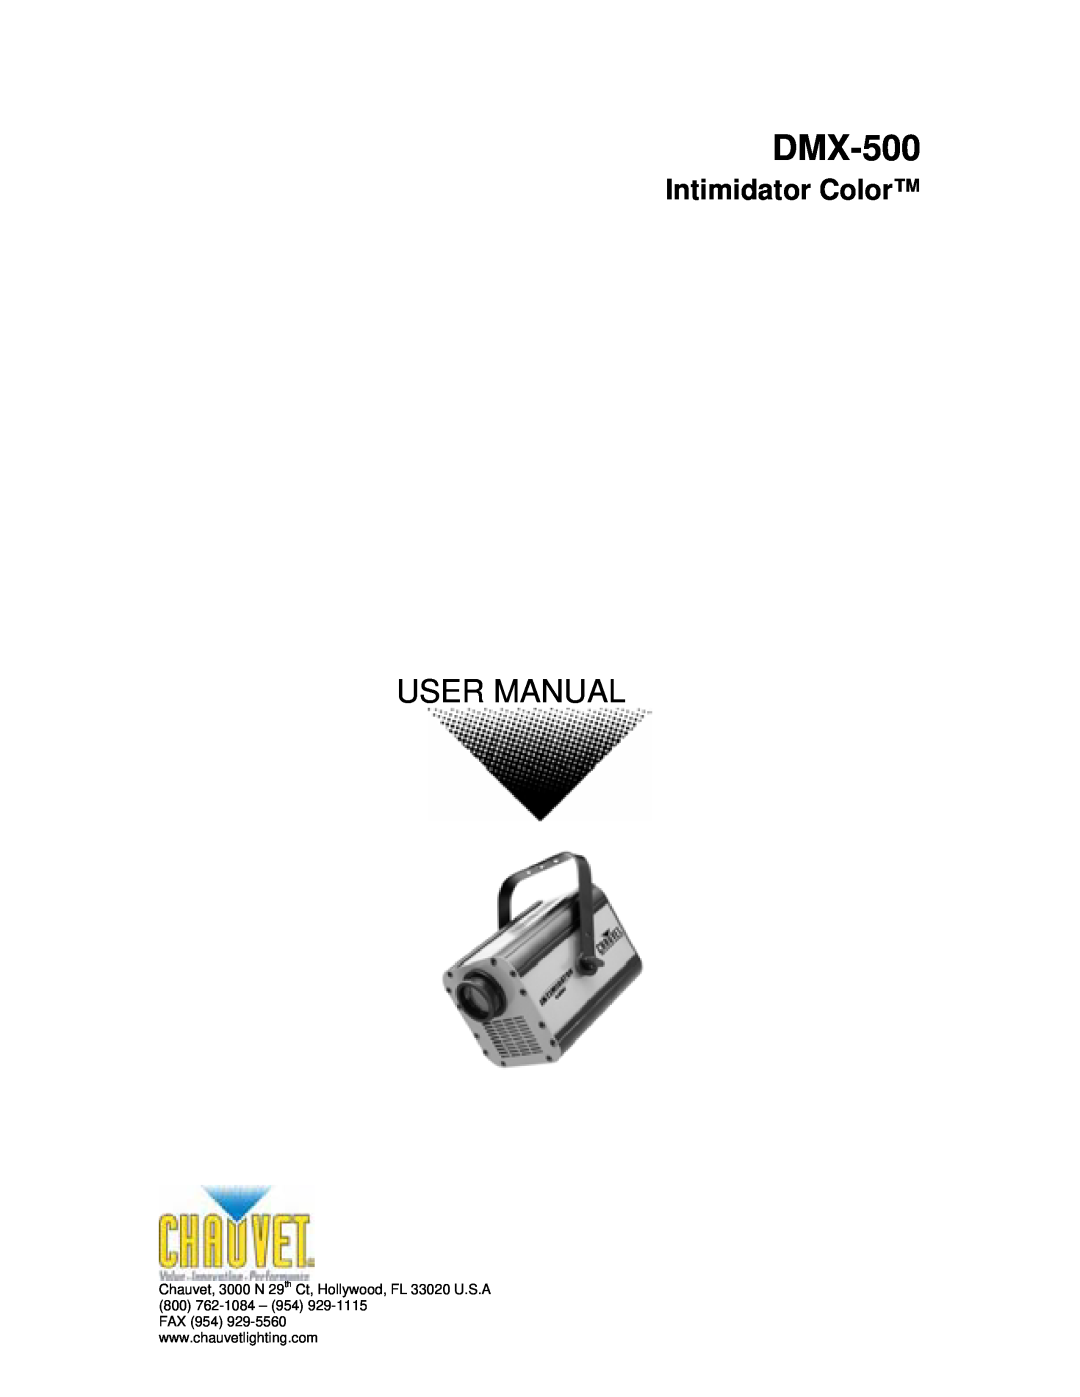 Chauvet DMX-500 user manual Intimidator Color 